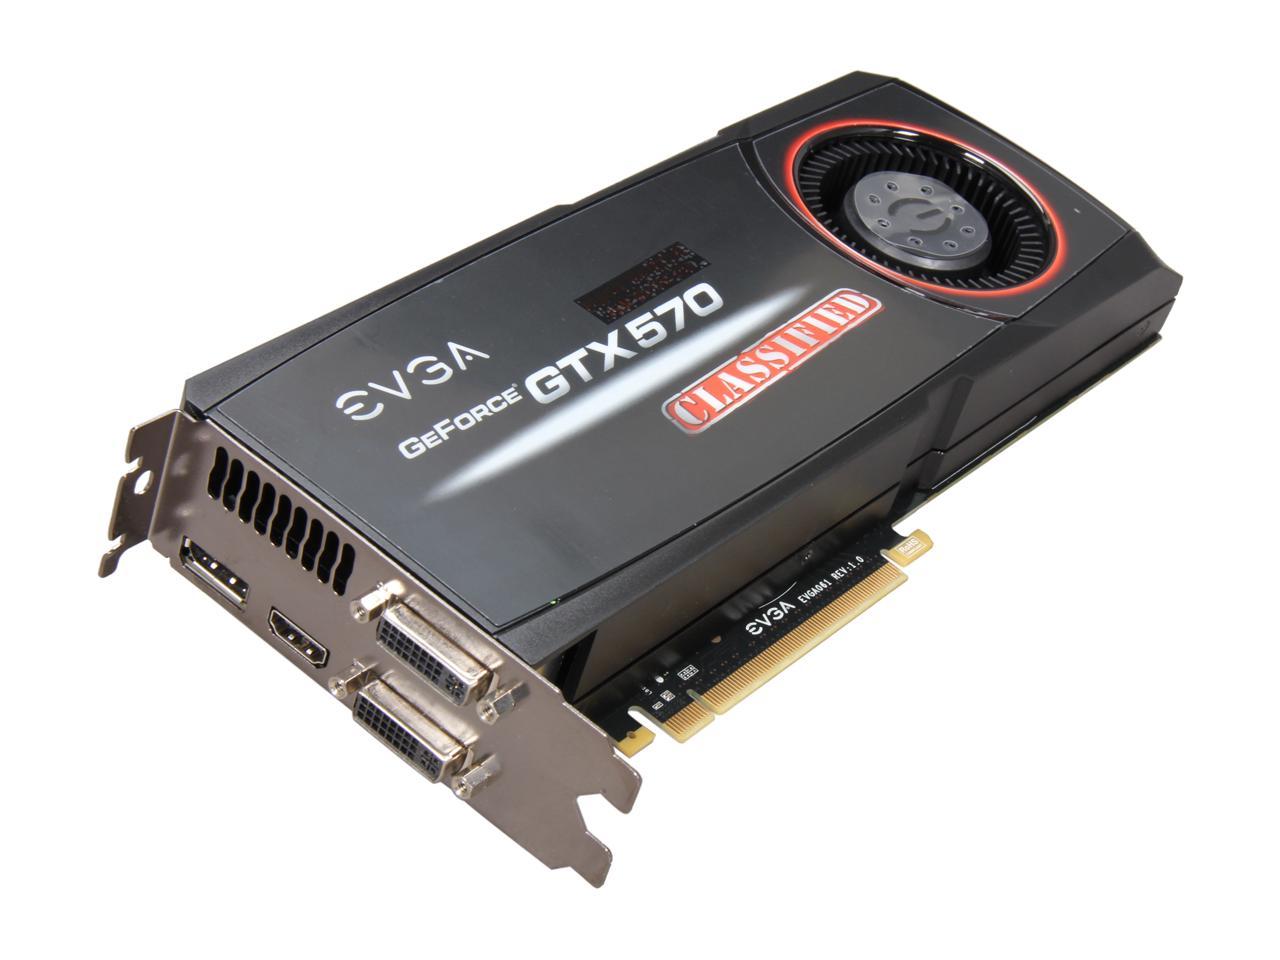 EVGA GeForce GTX 570 HD Superclocked 1280 MB GDDR5 PCI Express 2.0 2DVI/HDMI/Display Port SLI Ready Graphics Card 012-P3-1573-KR